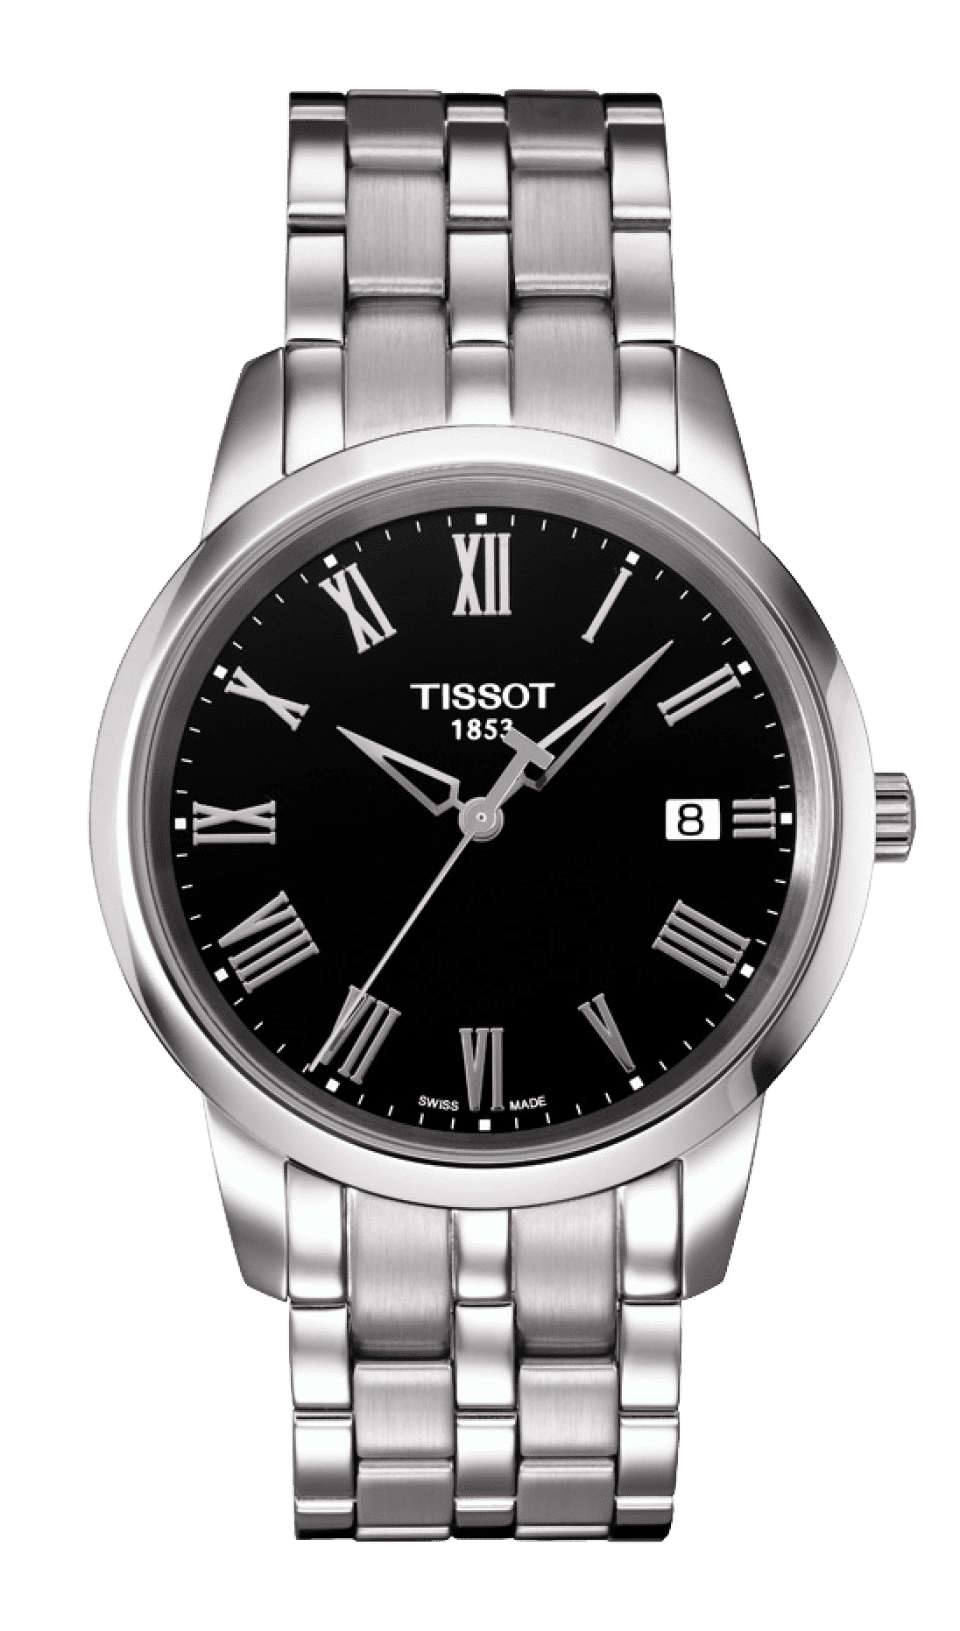 Tissot watches Savonette pocket watch by Azzi Jewelers